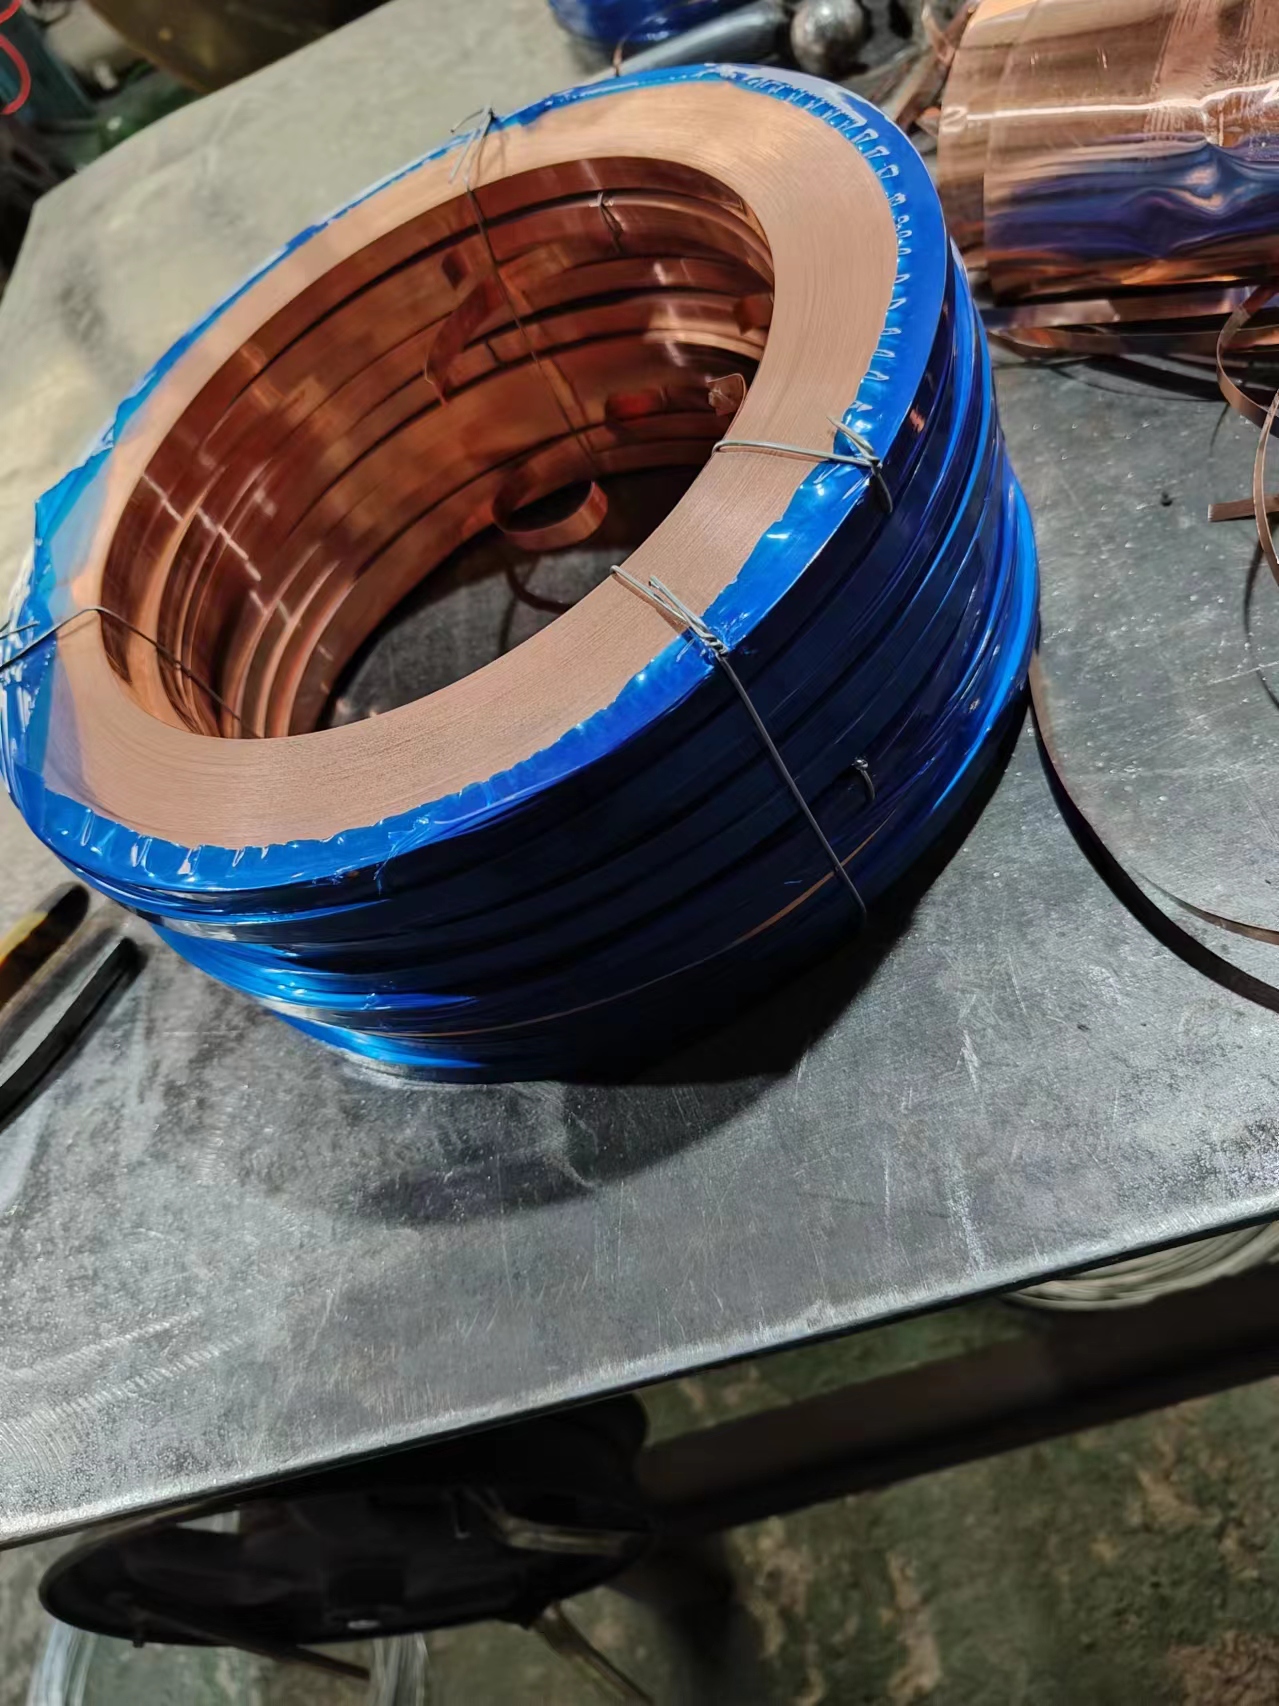 copper strip